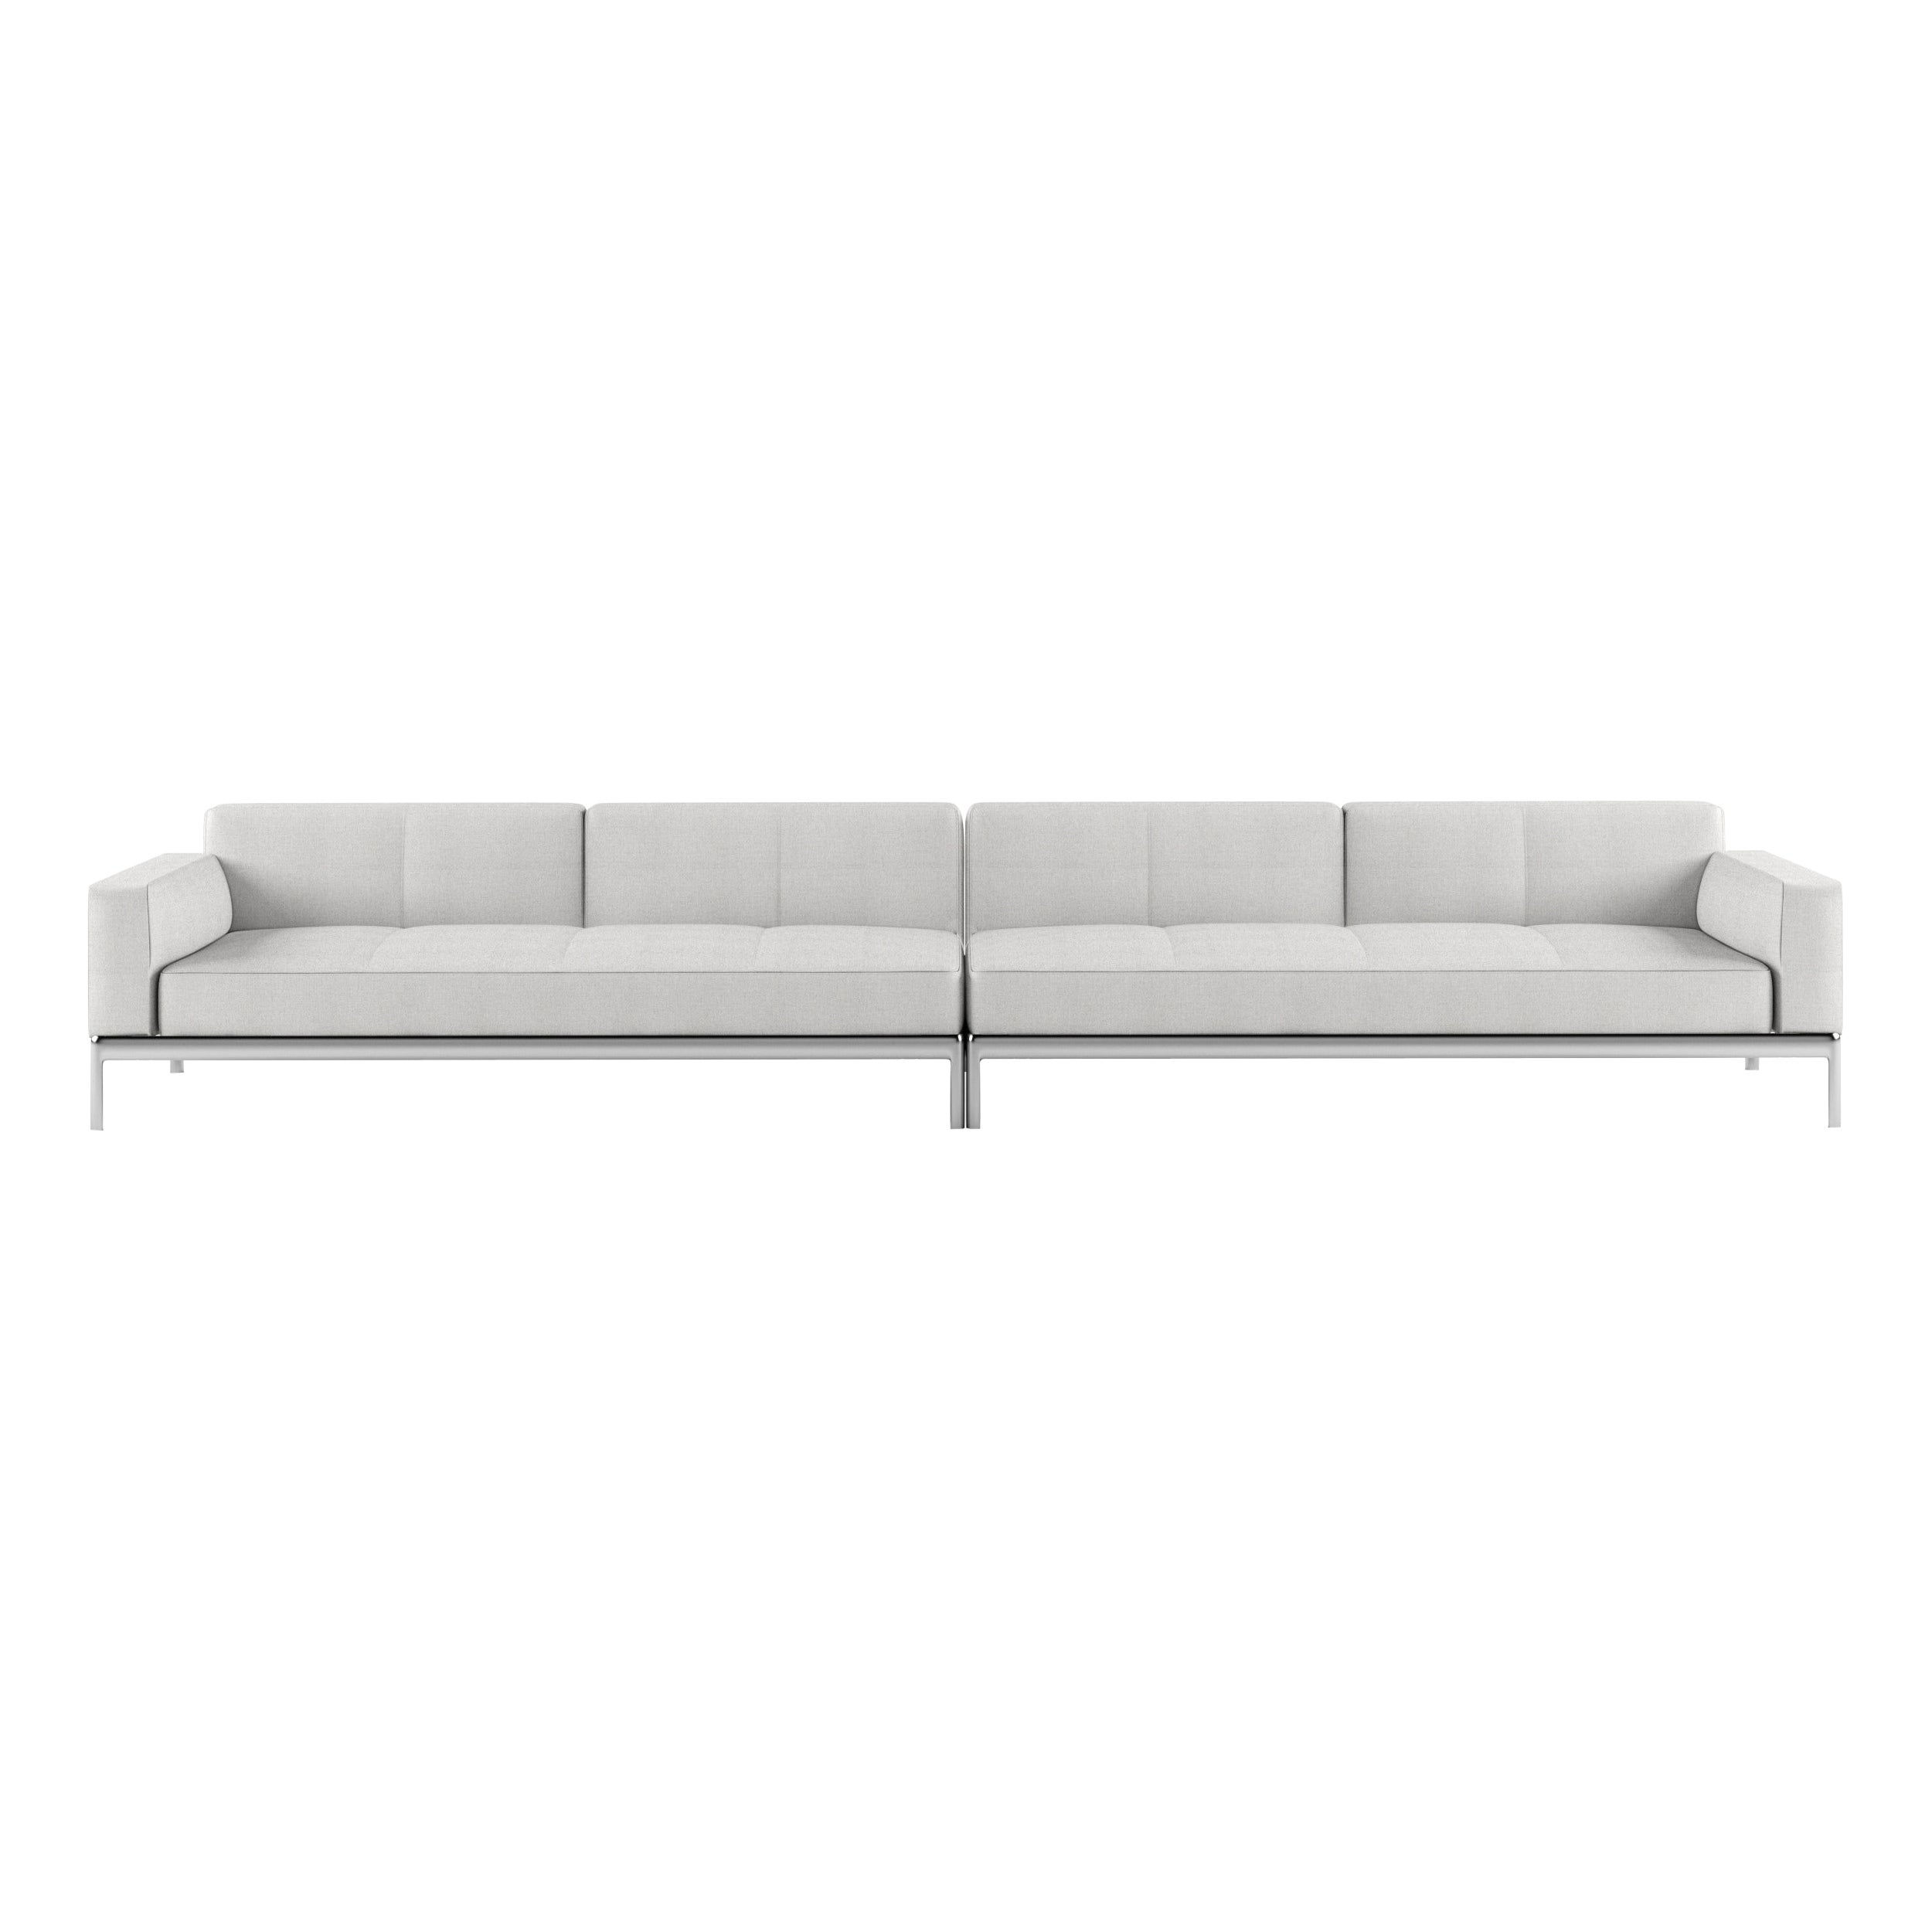 Alias P06 AluZen Sectional Sofa in Upholstery with Polished Aluminium Frame